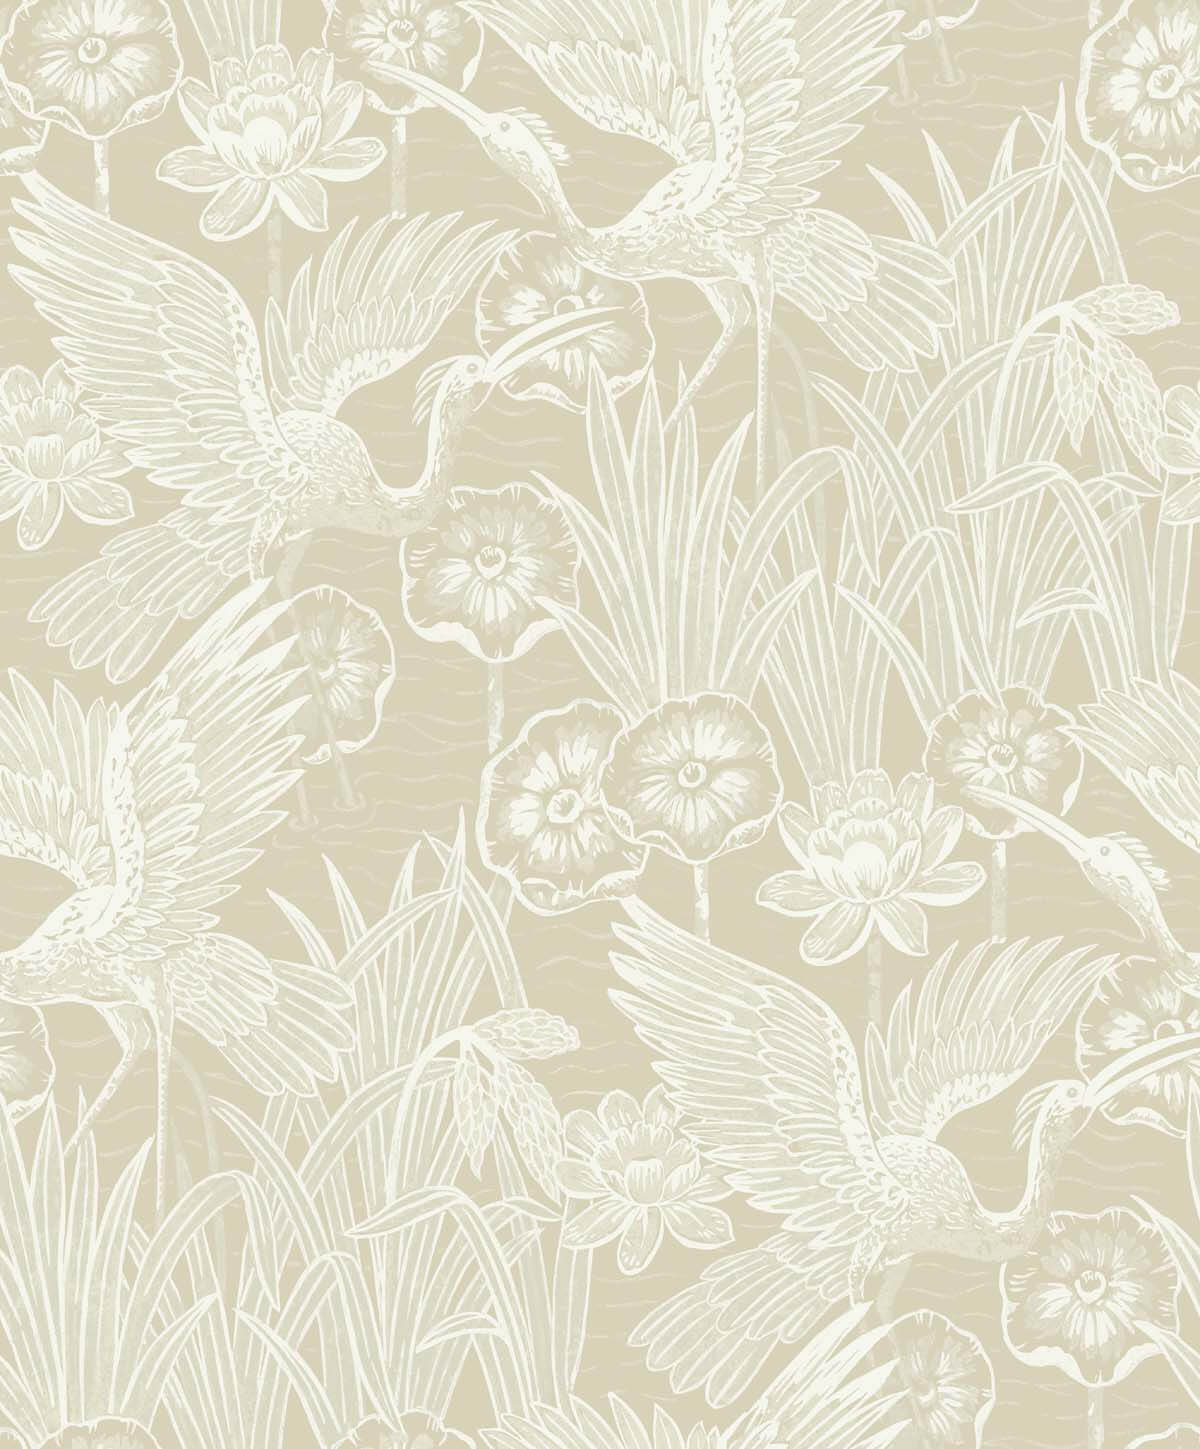 White Heron Marsh Cranes Wallpaper - Shore